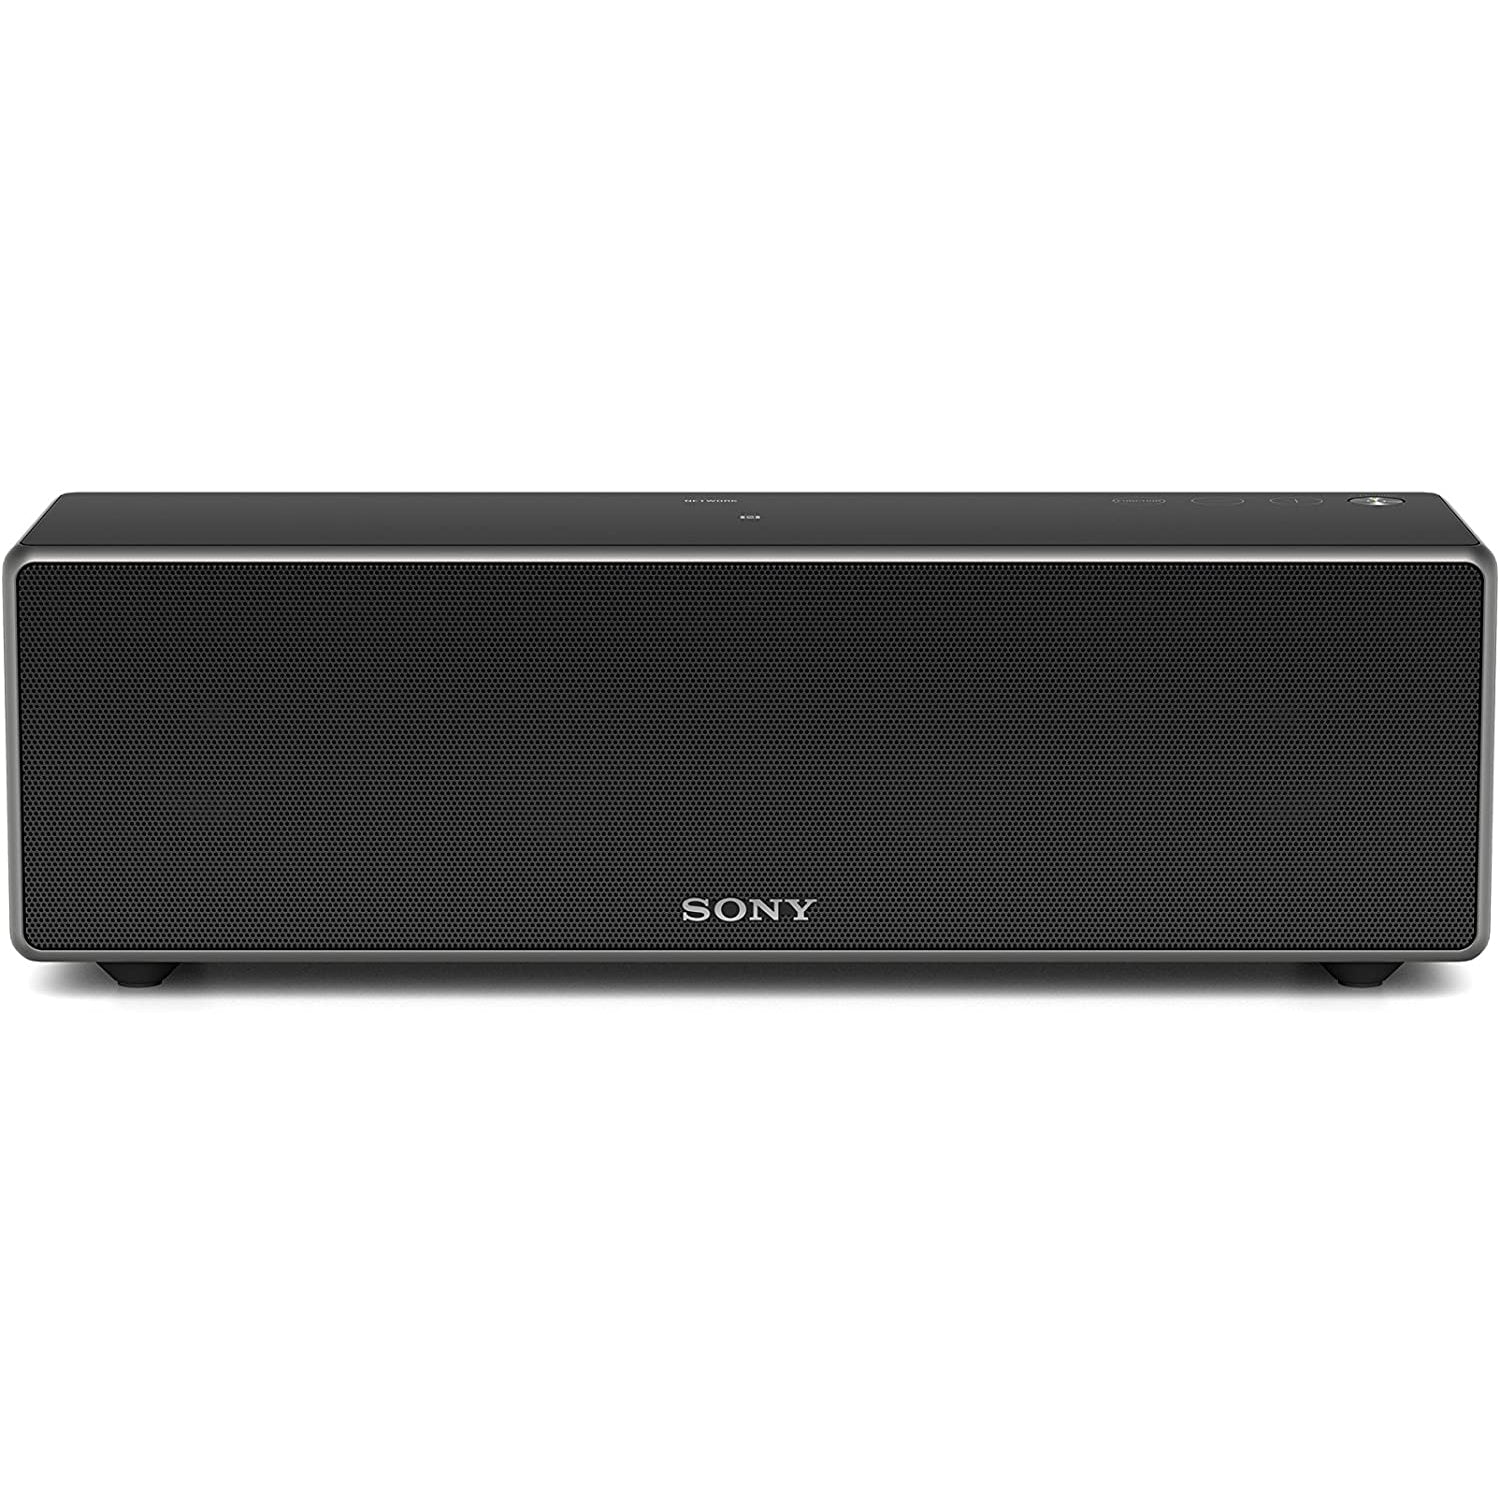 Sony SRS-ZR7 High-Resolution Audio Multi-Room Speaker - Black